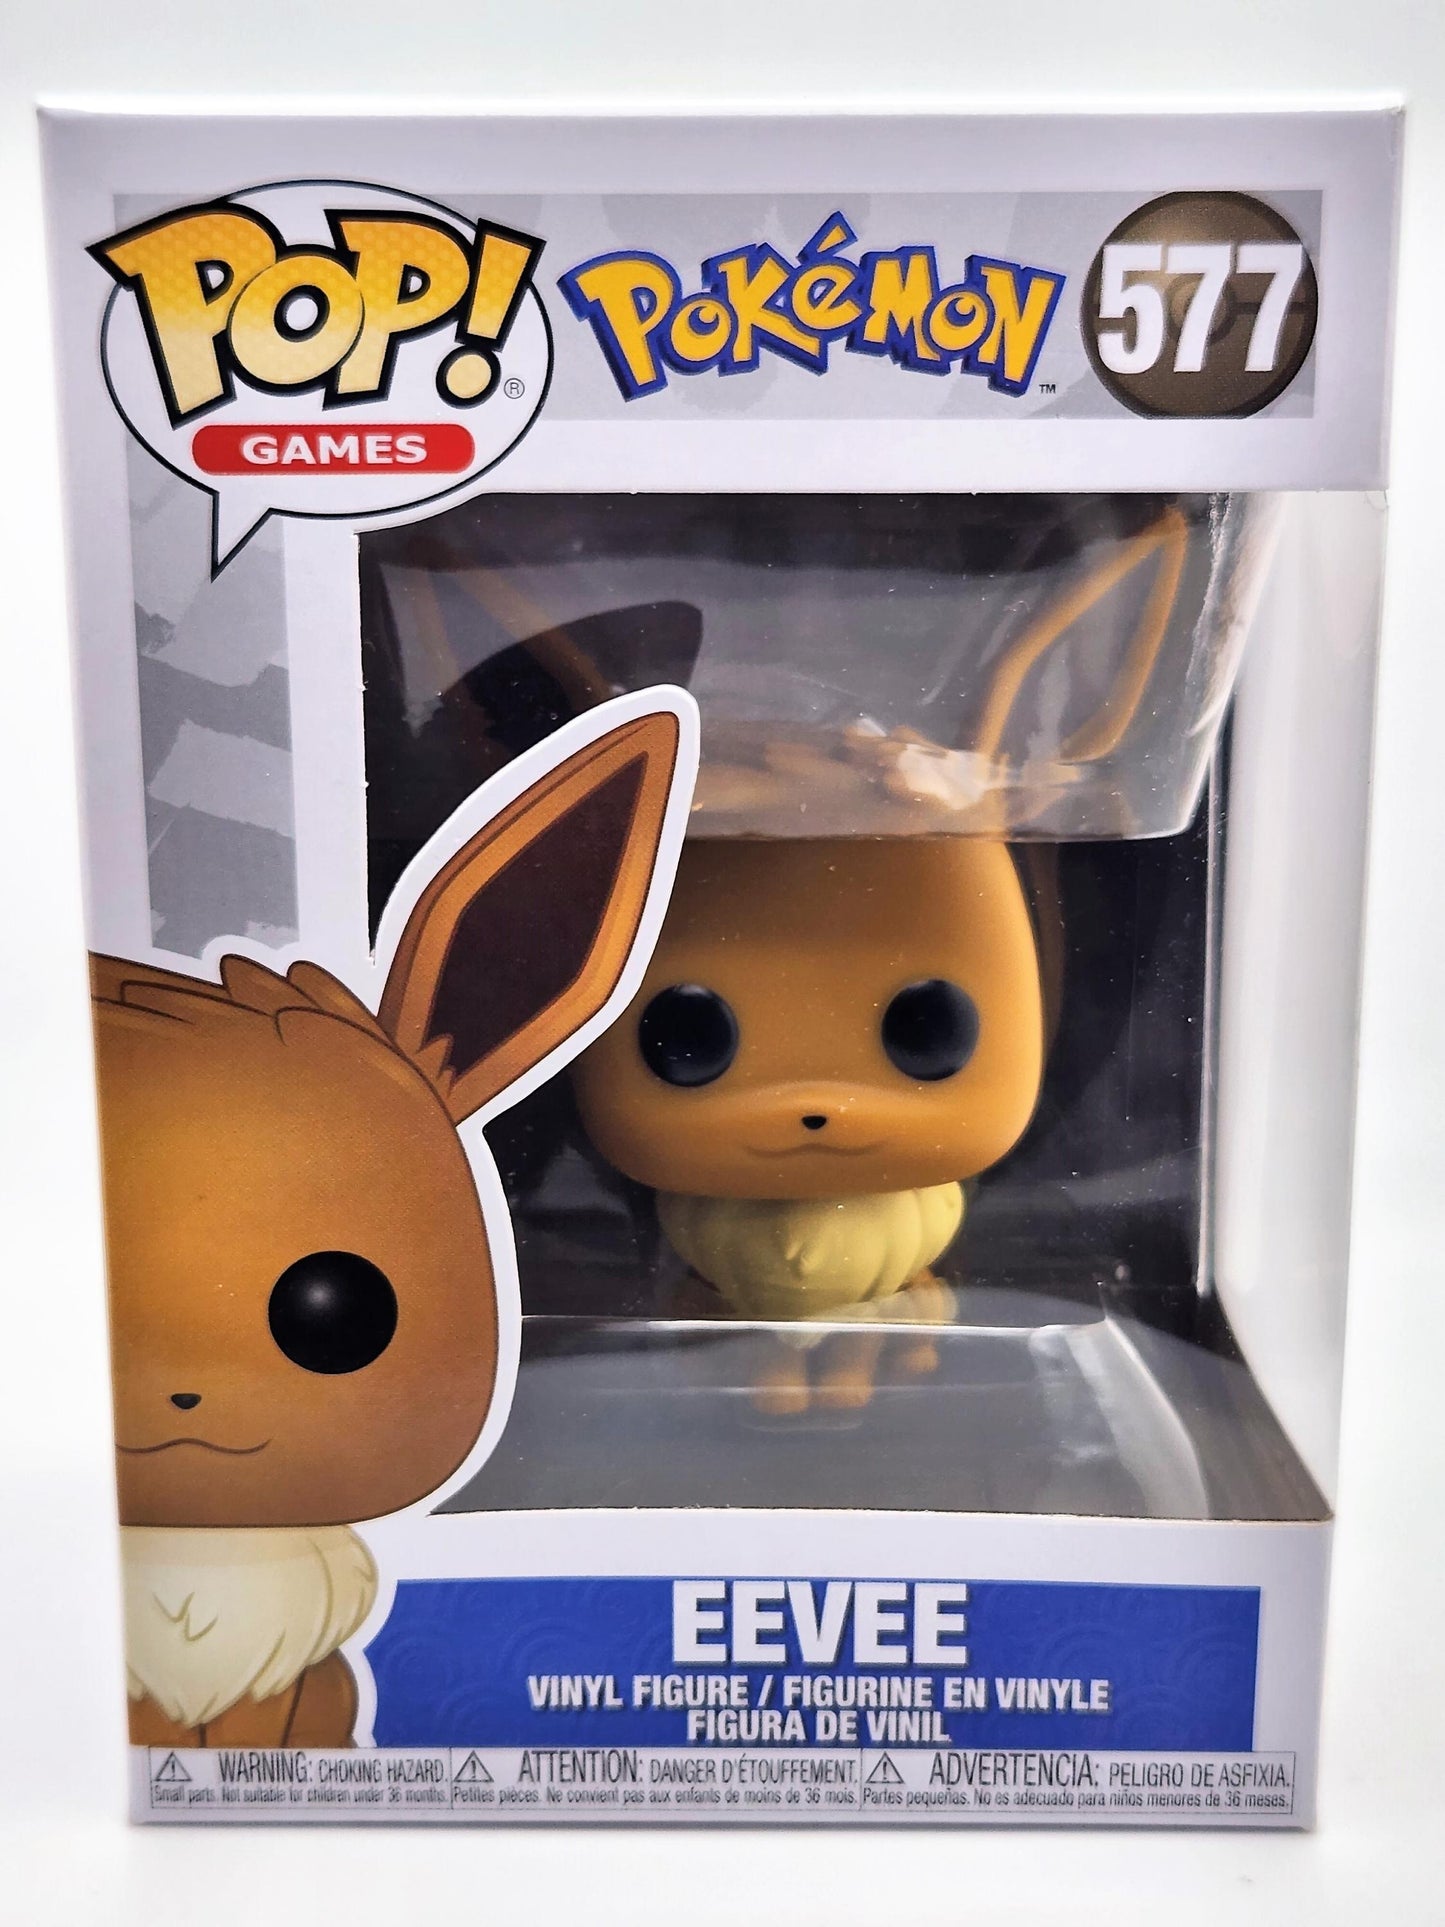 Eevee - #577 - Box Condition 8/10